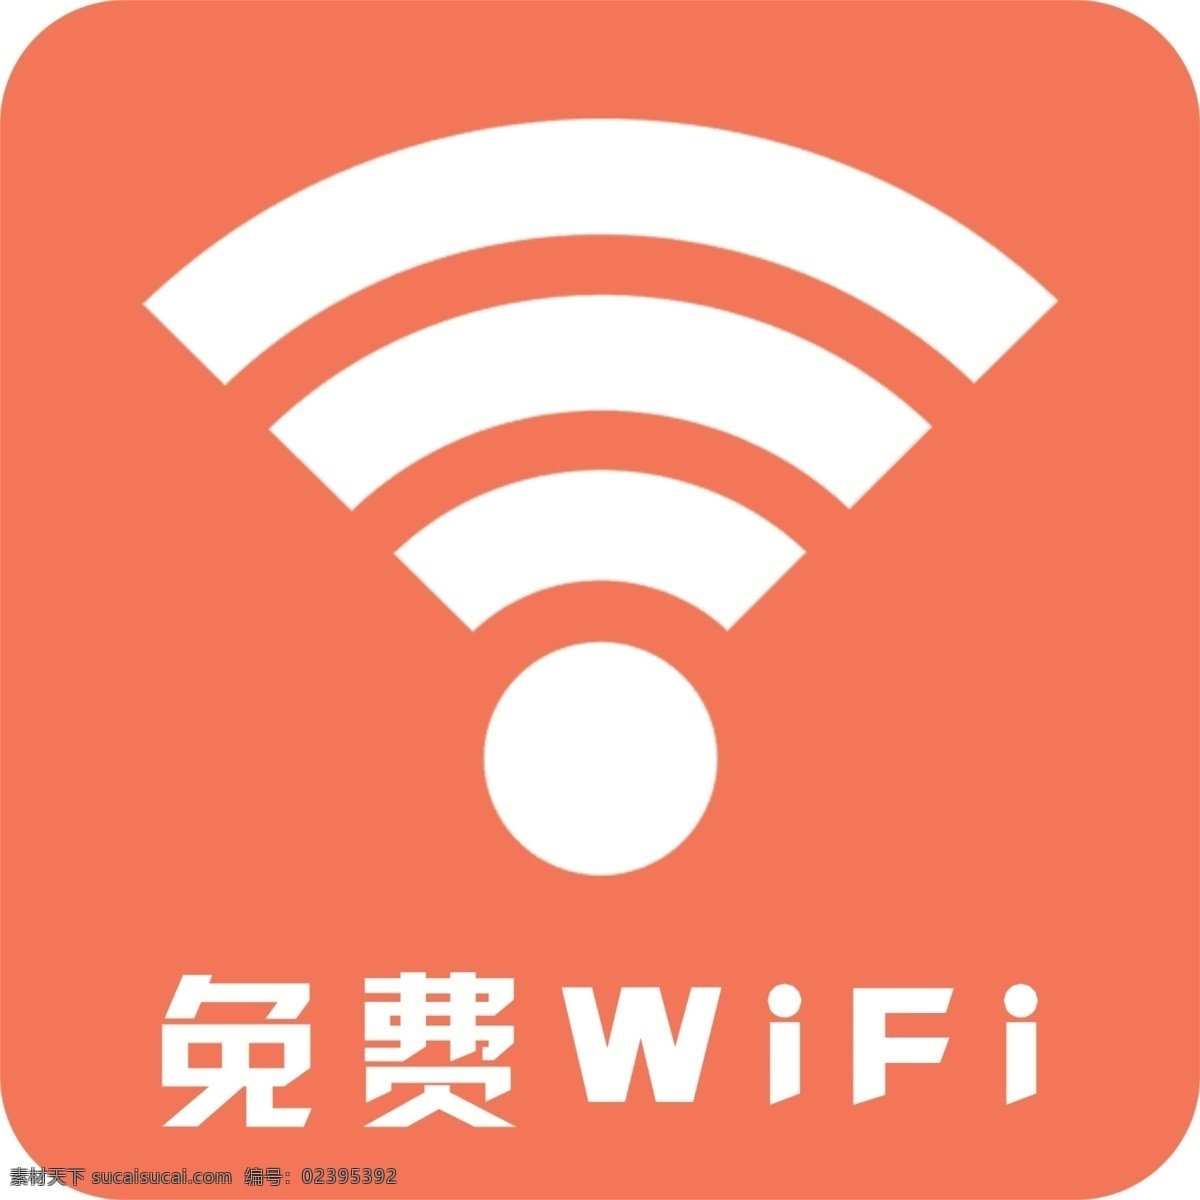 wifi标志 wifi 标志 免费 无线标志 标志图标 公共标识标志